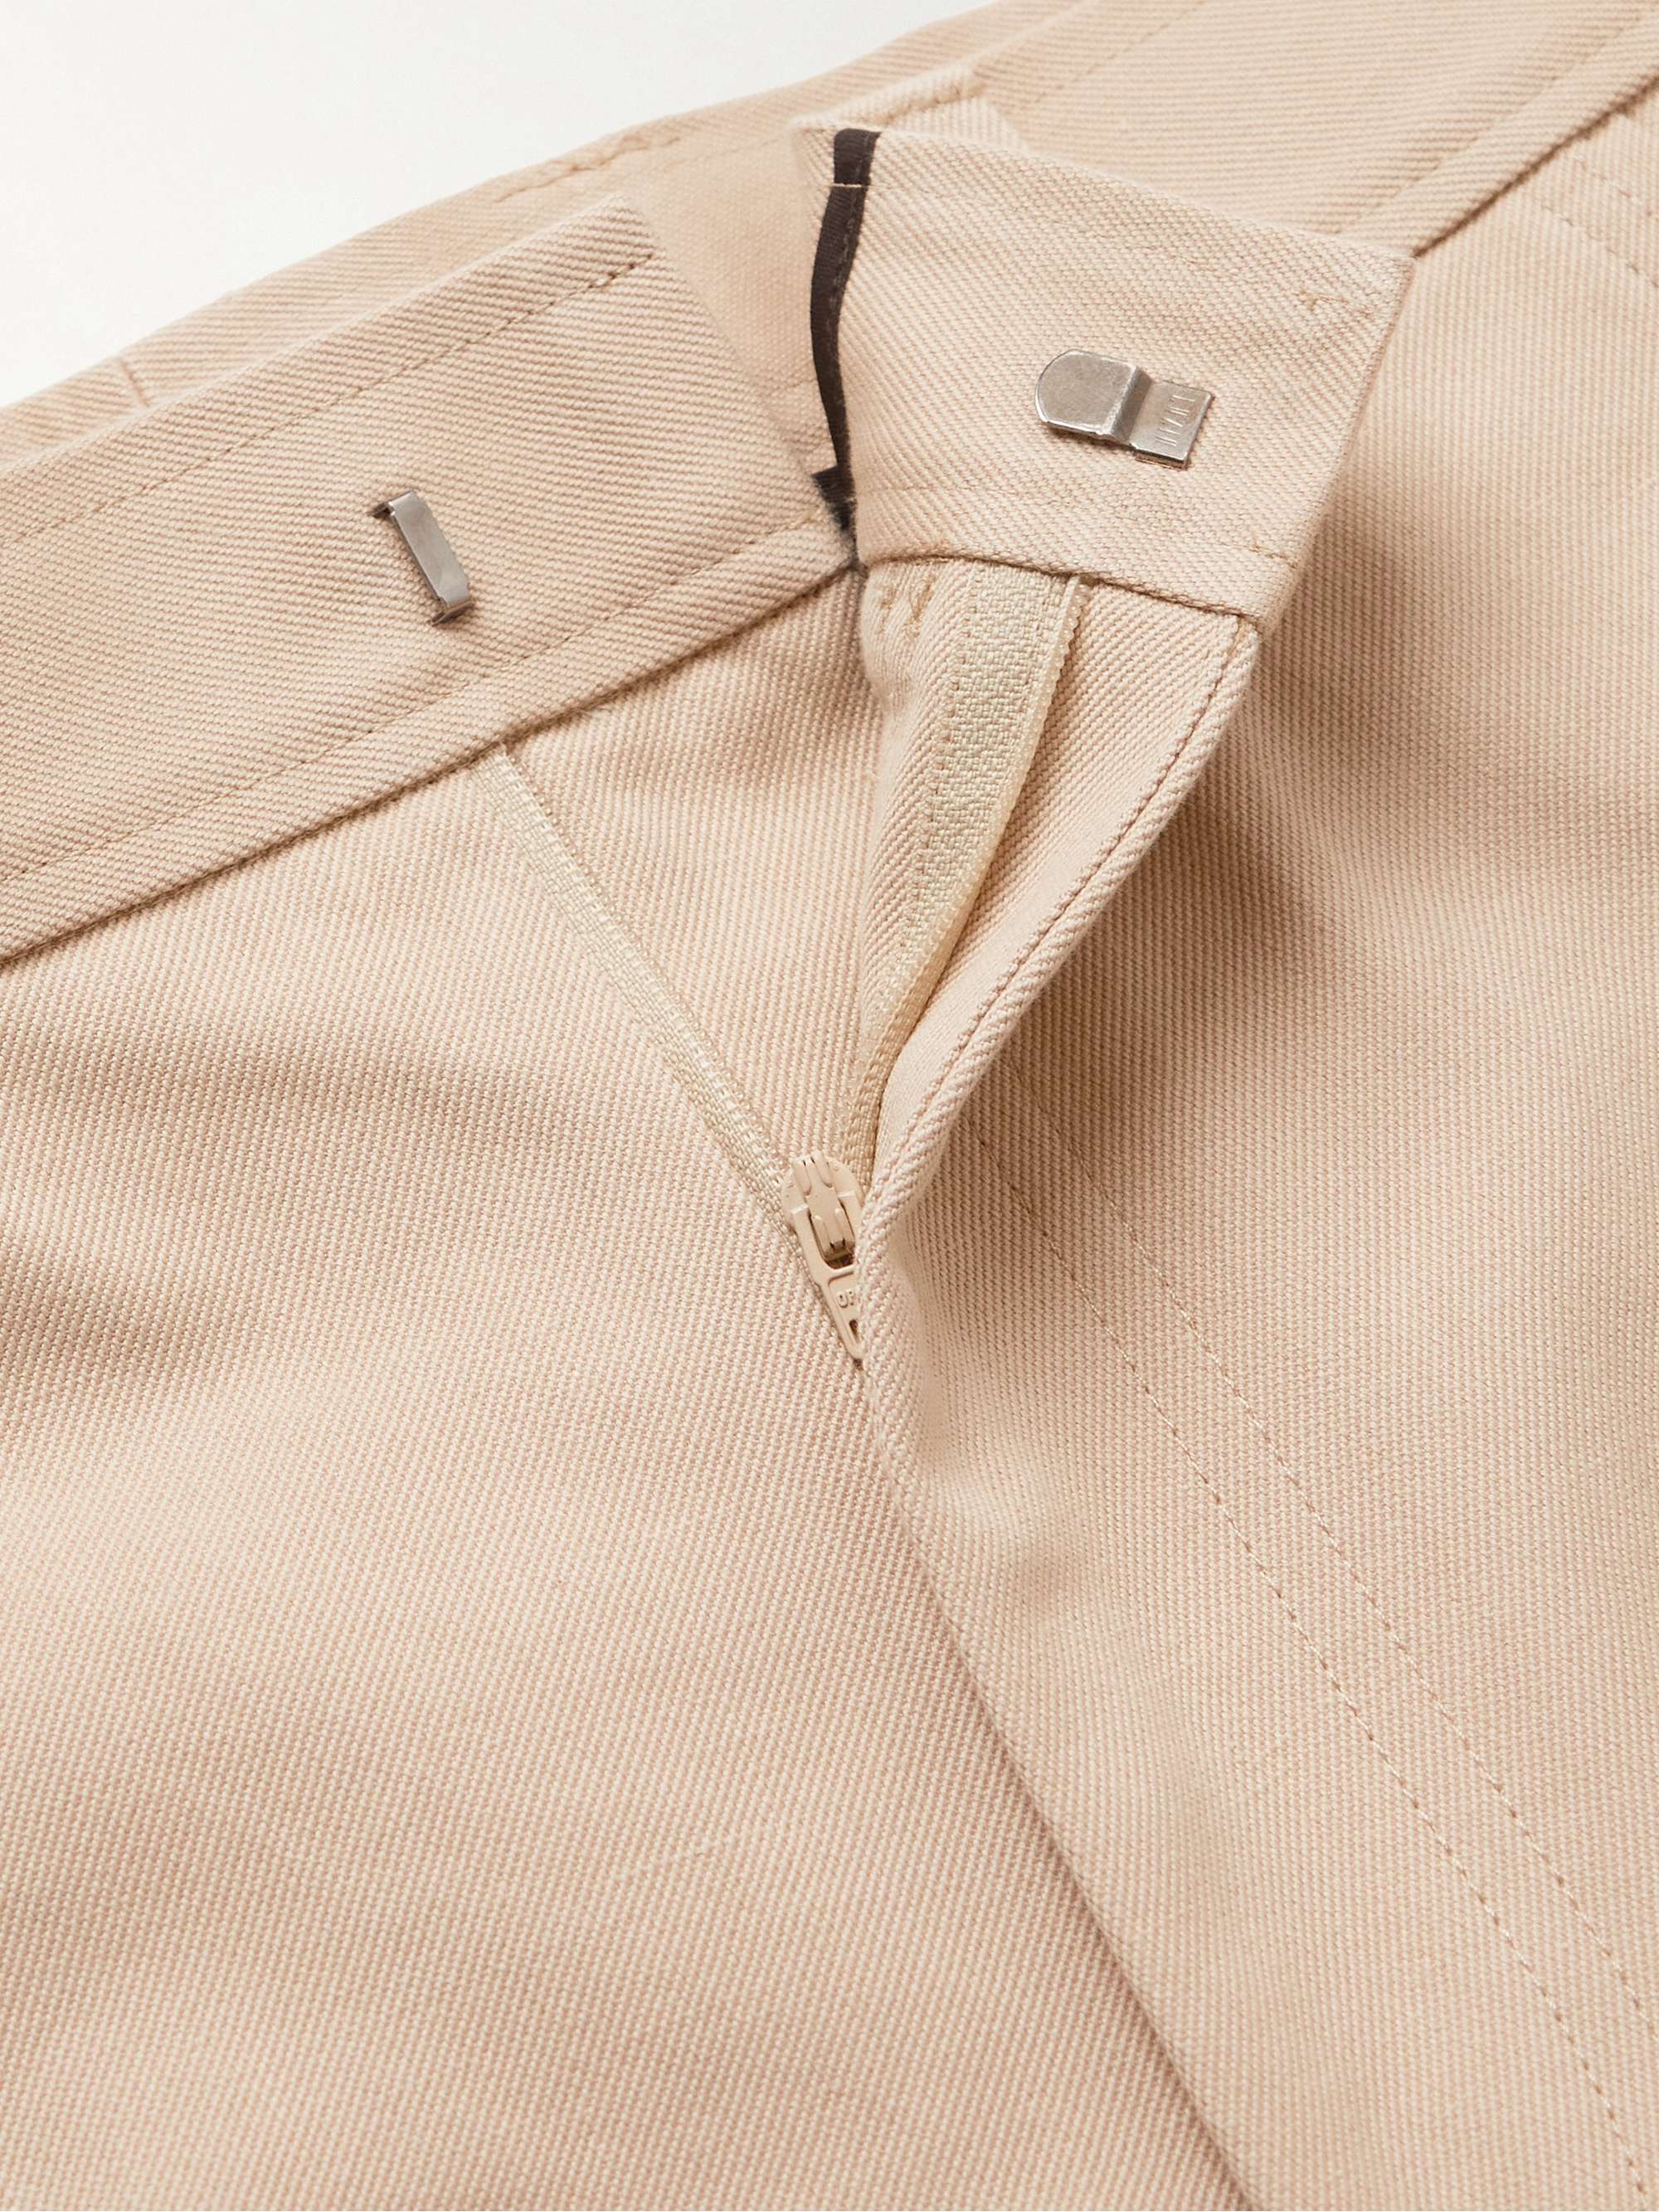 ZEGNA Straight-Leg Cotton, Silk and Linen-Blend Twill Trousers